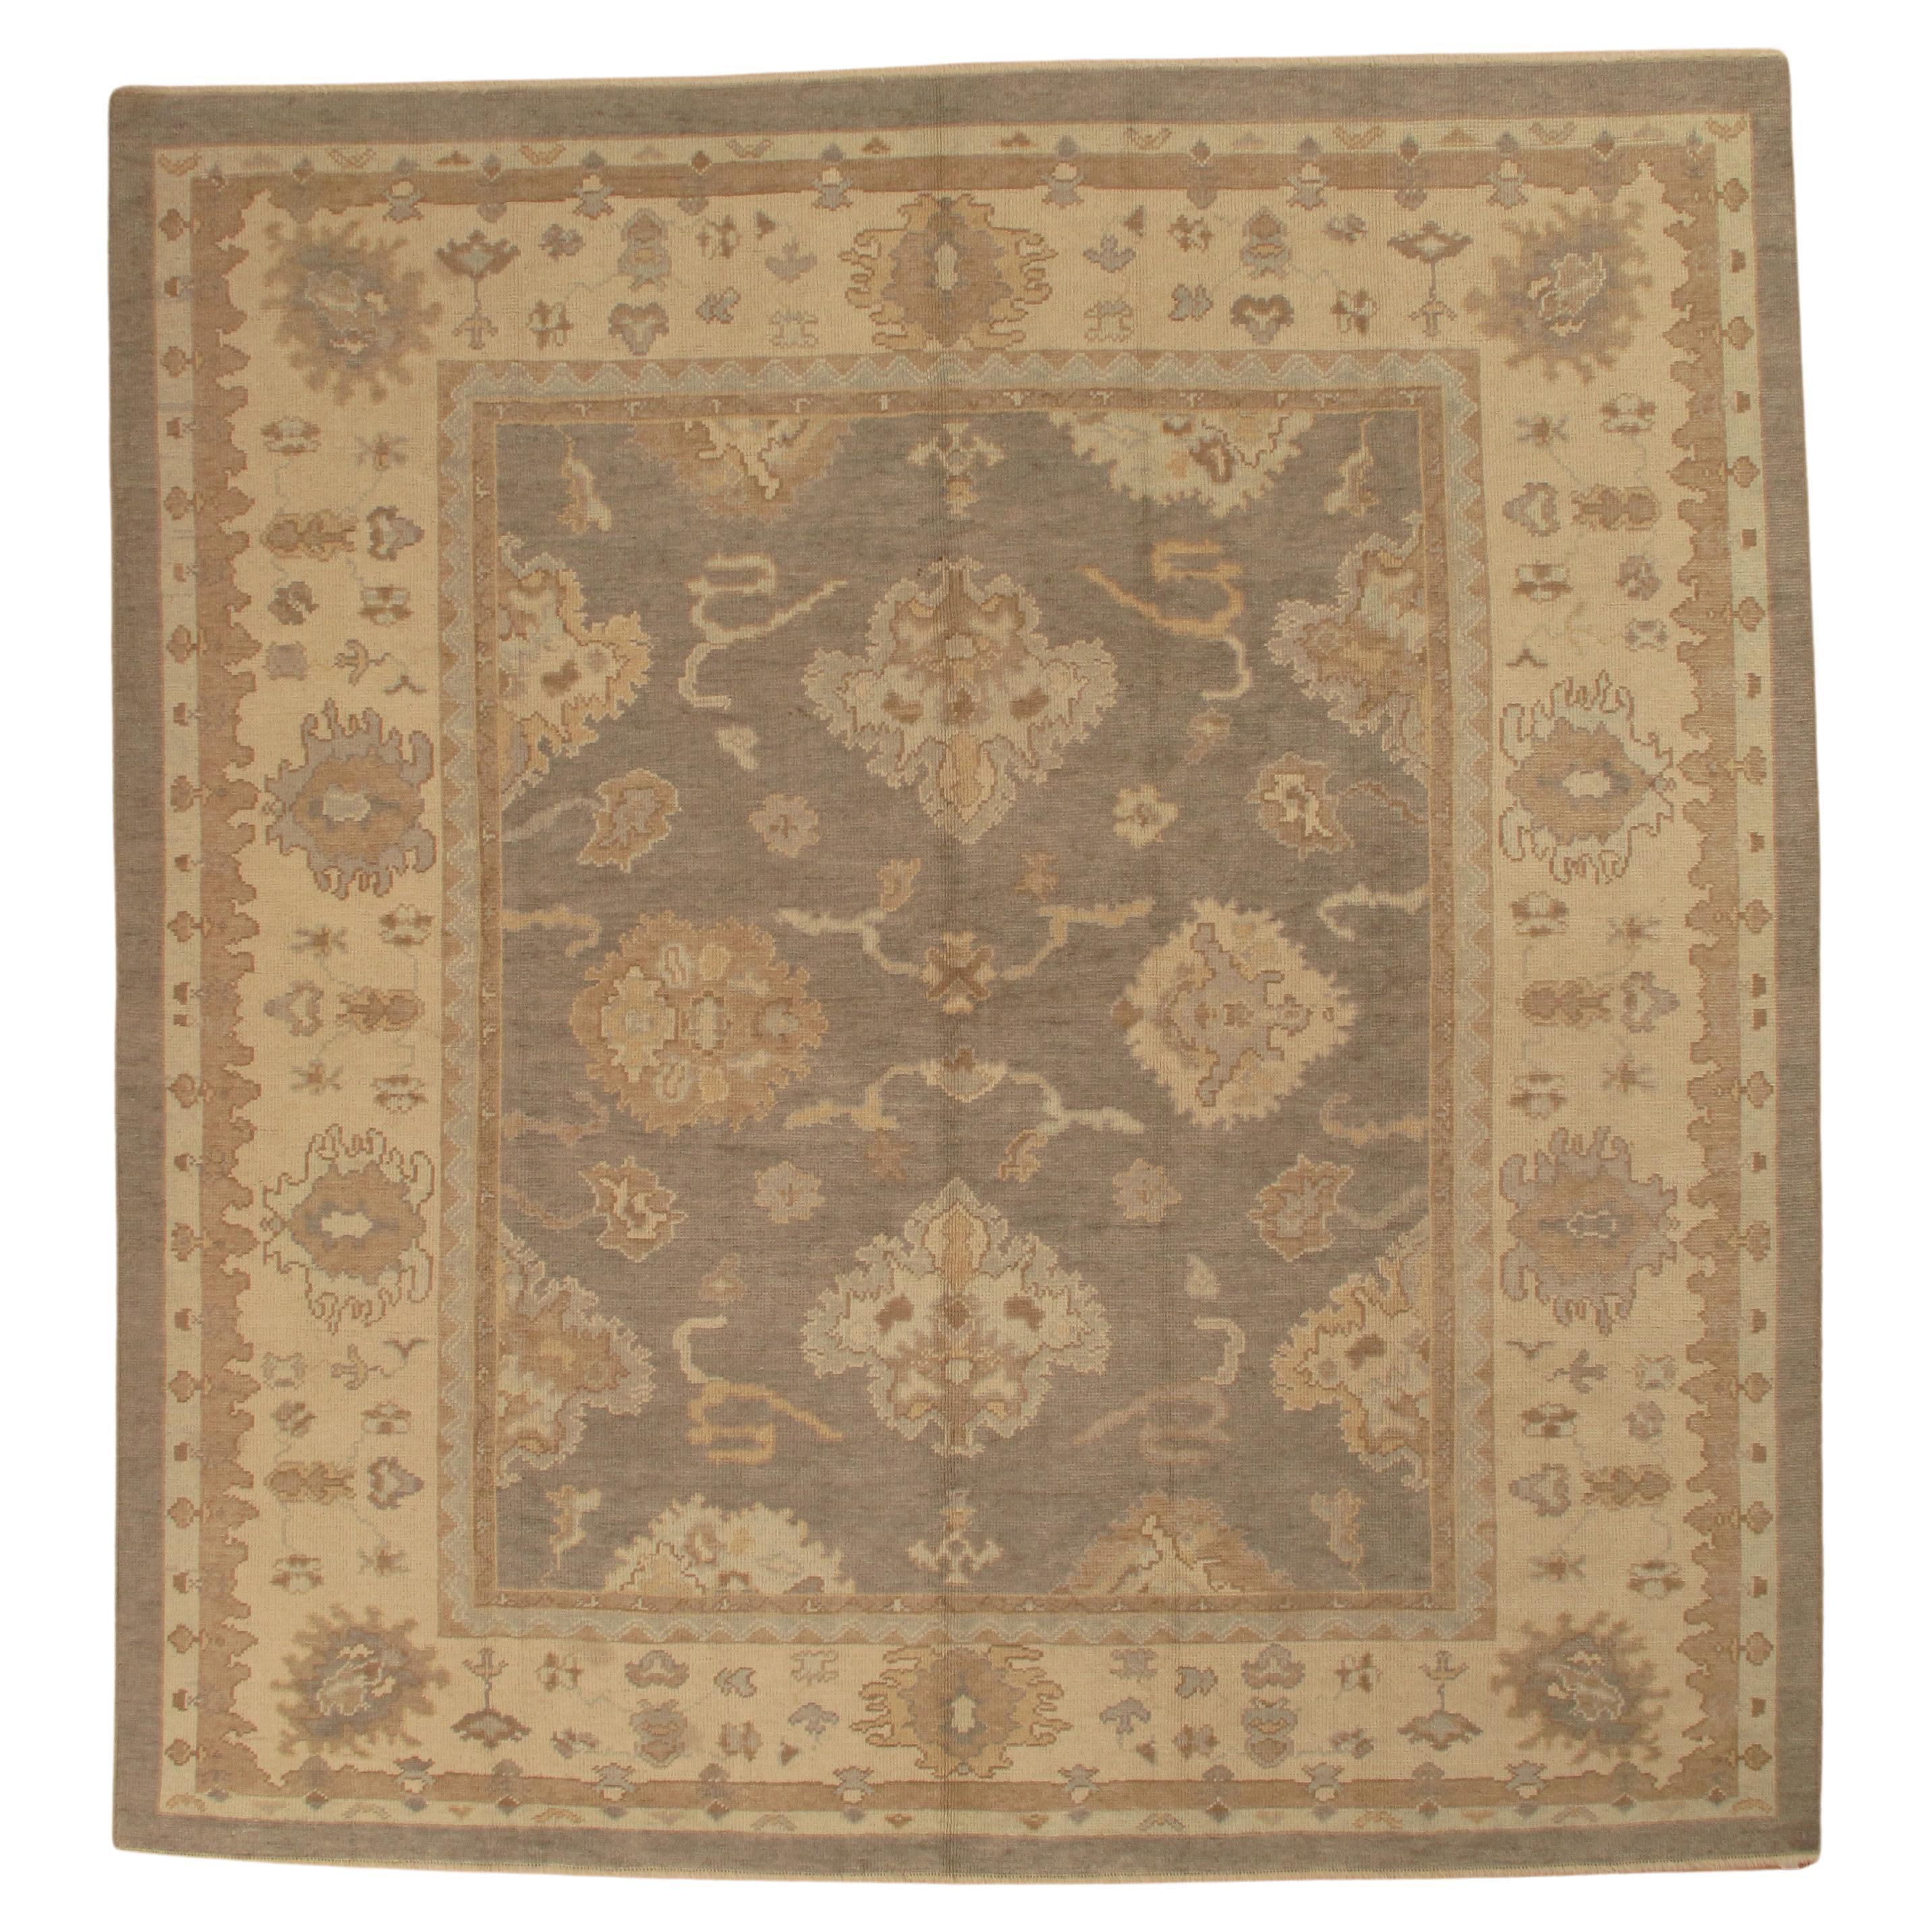 Vintage Oushak Carpet, Oriental Rug, Handmade Grey, Ivory, Saffron